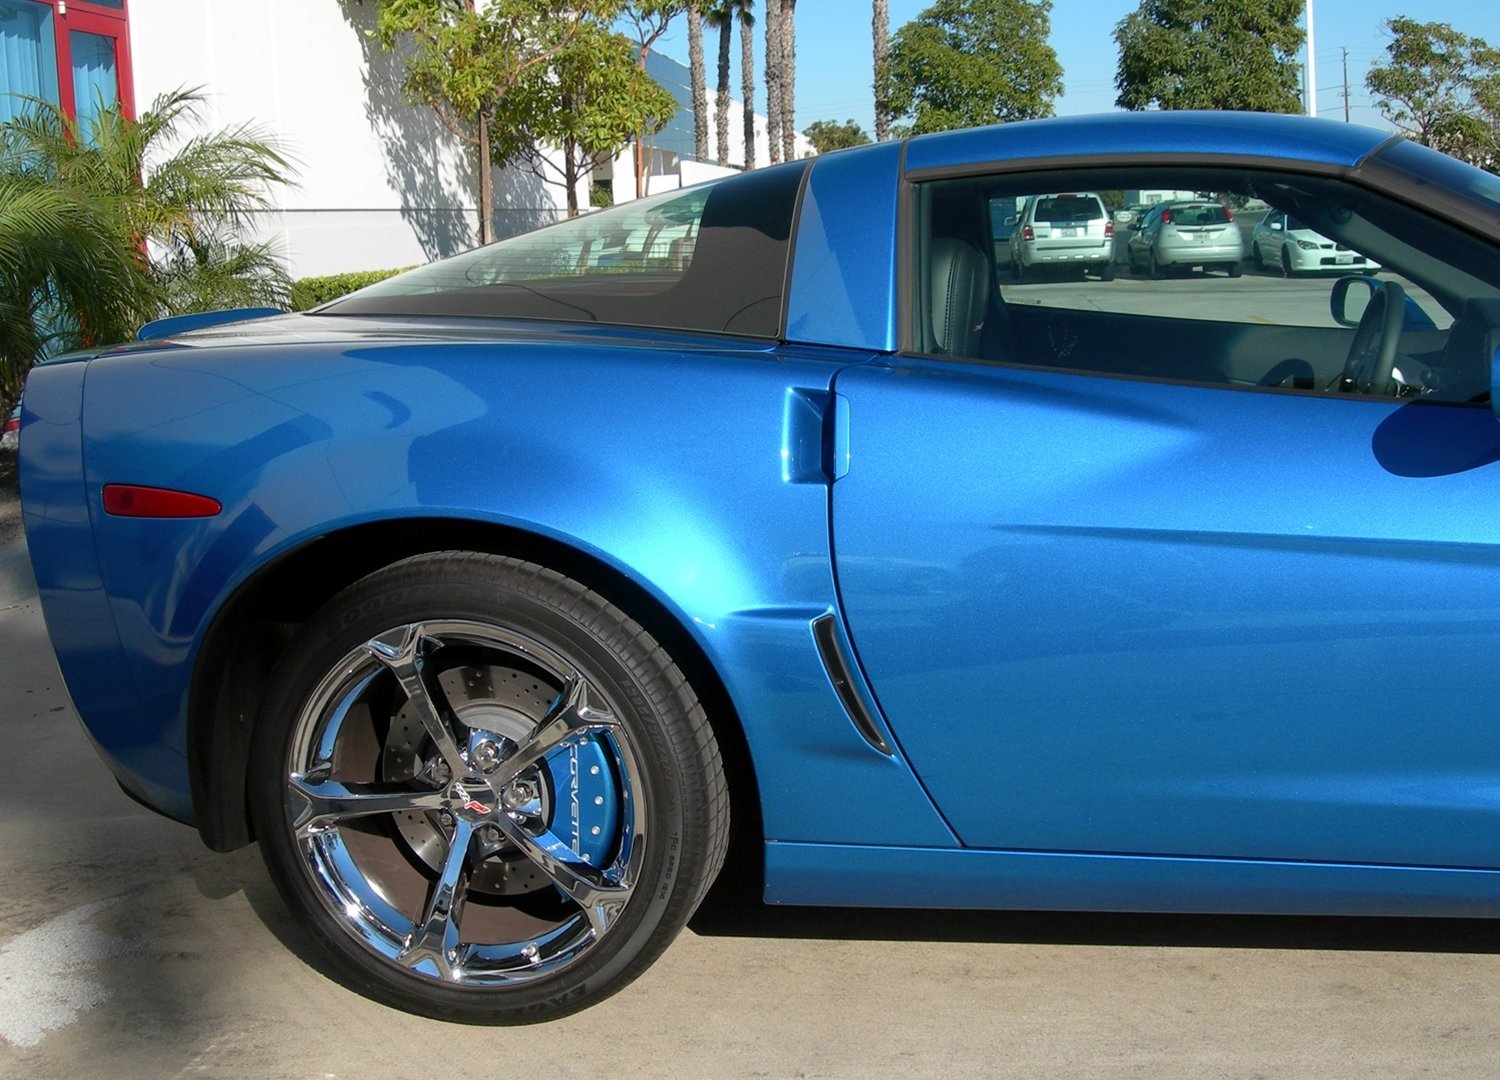 Corvette Brake Caliper Cover Set (4) - Jet Stream Blue : 2006-2013 C6Z06 & GS Only with Silver Script